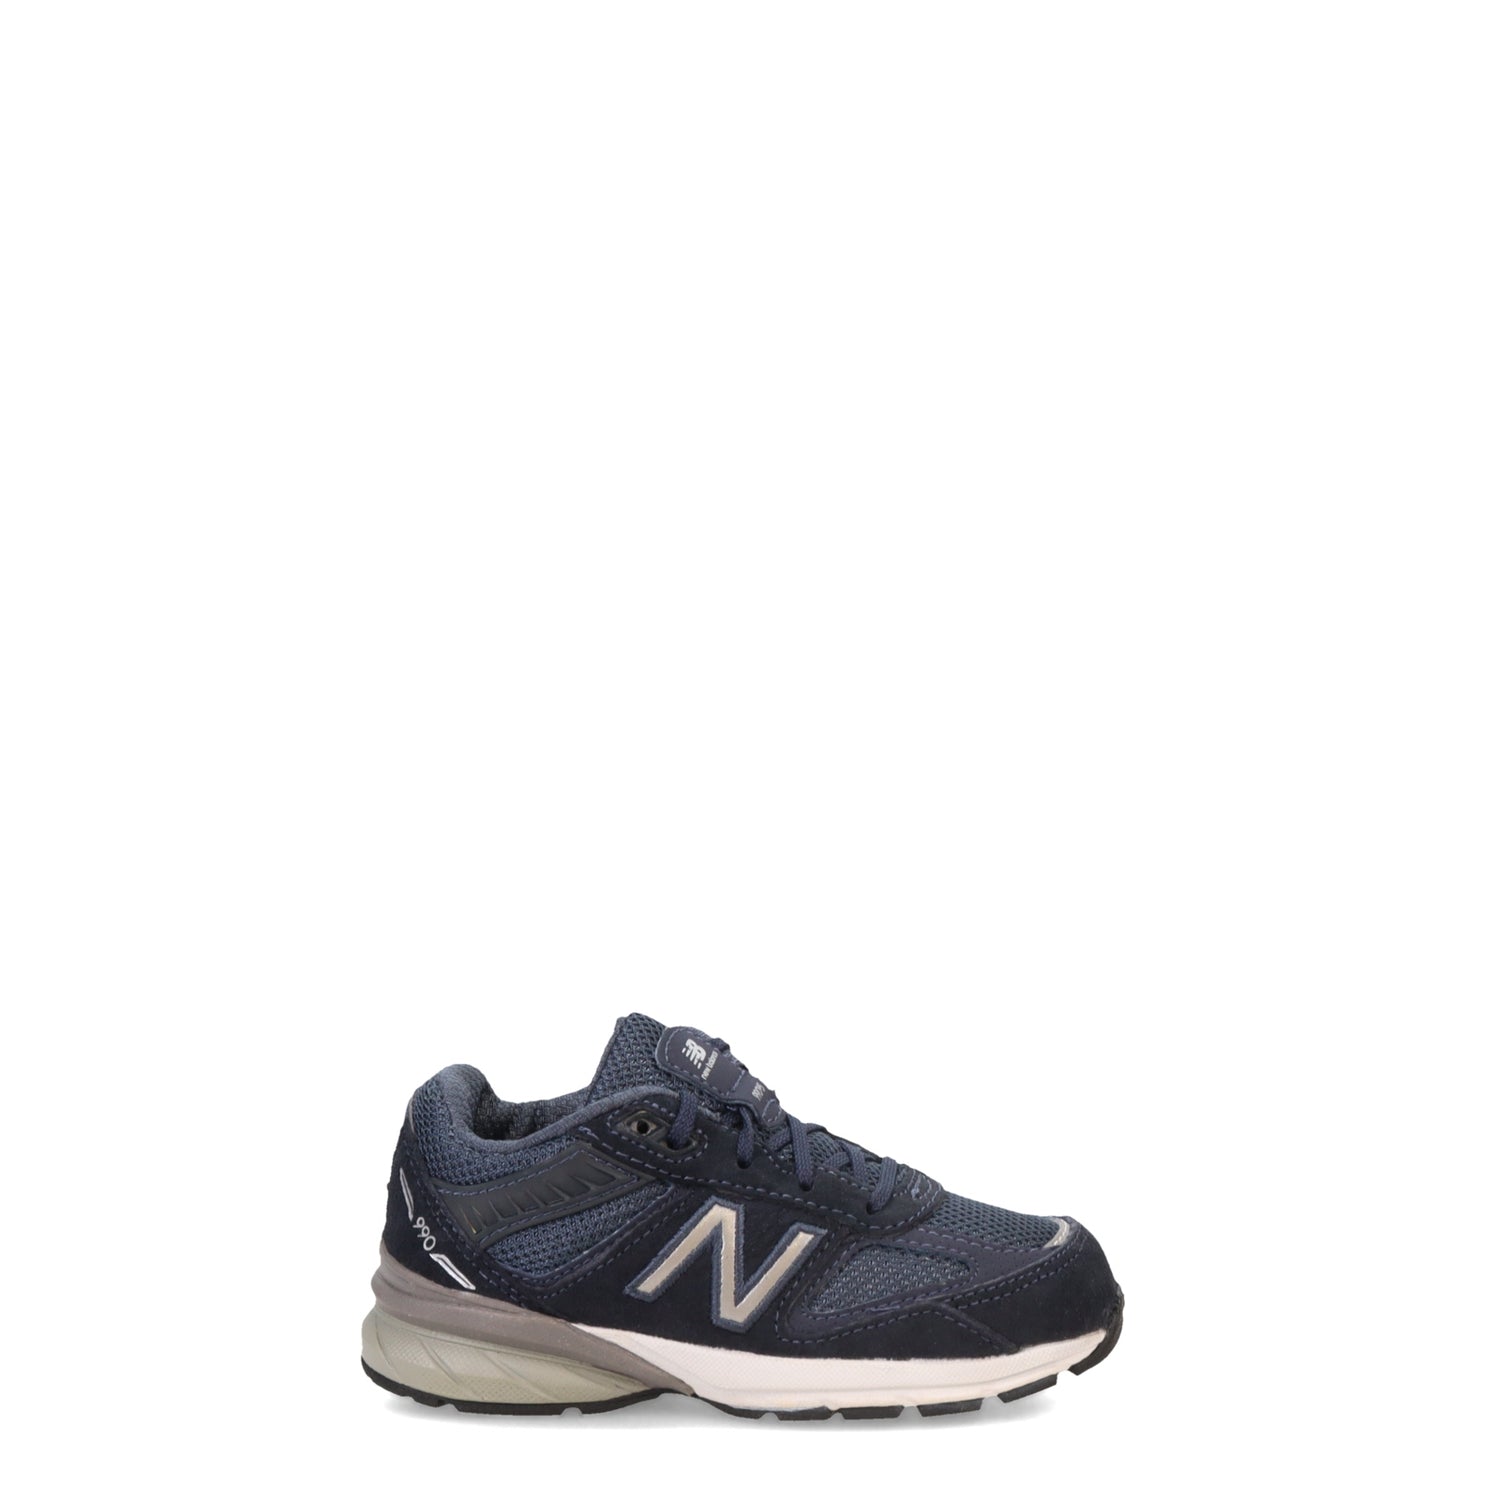 Peltz Shoes  Boy's New Balance 990v5 Sneaker - Toddler Navy IC990NV5